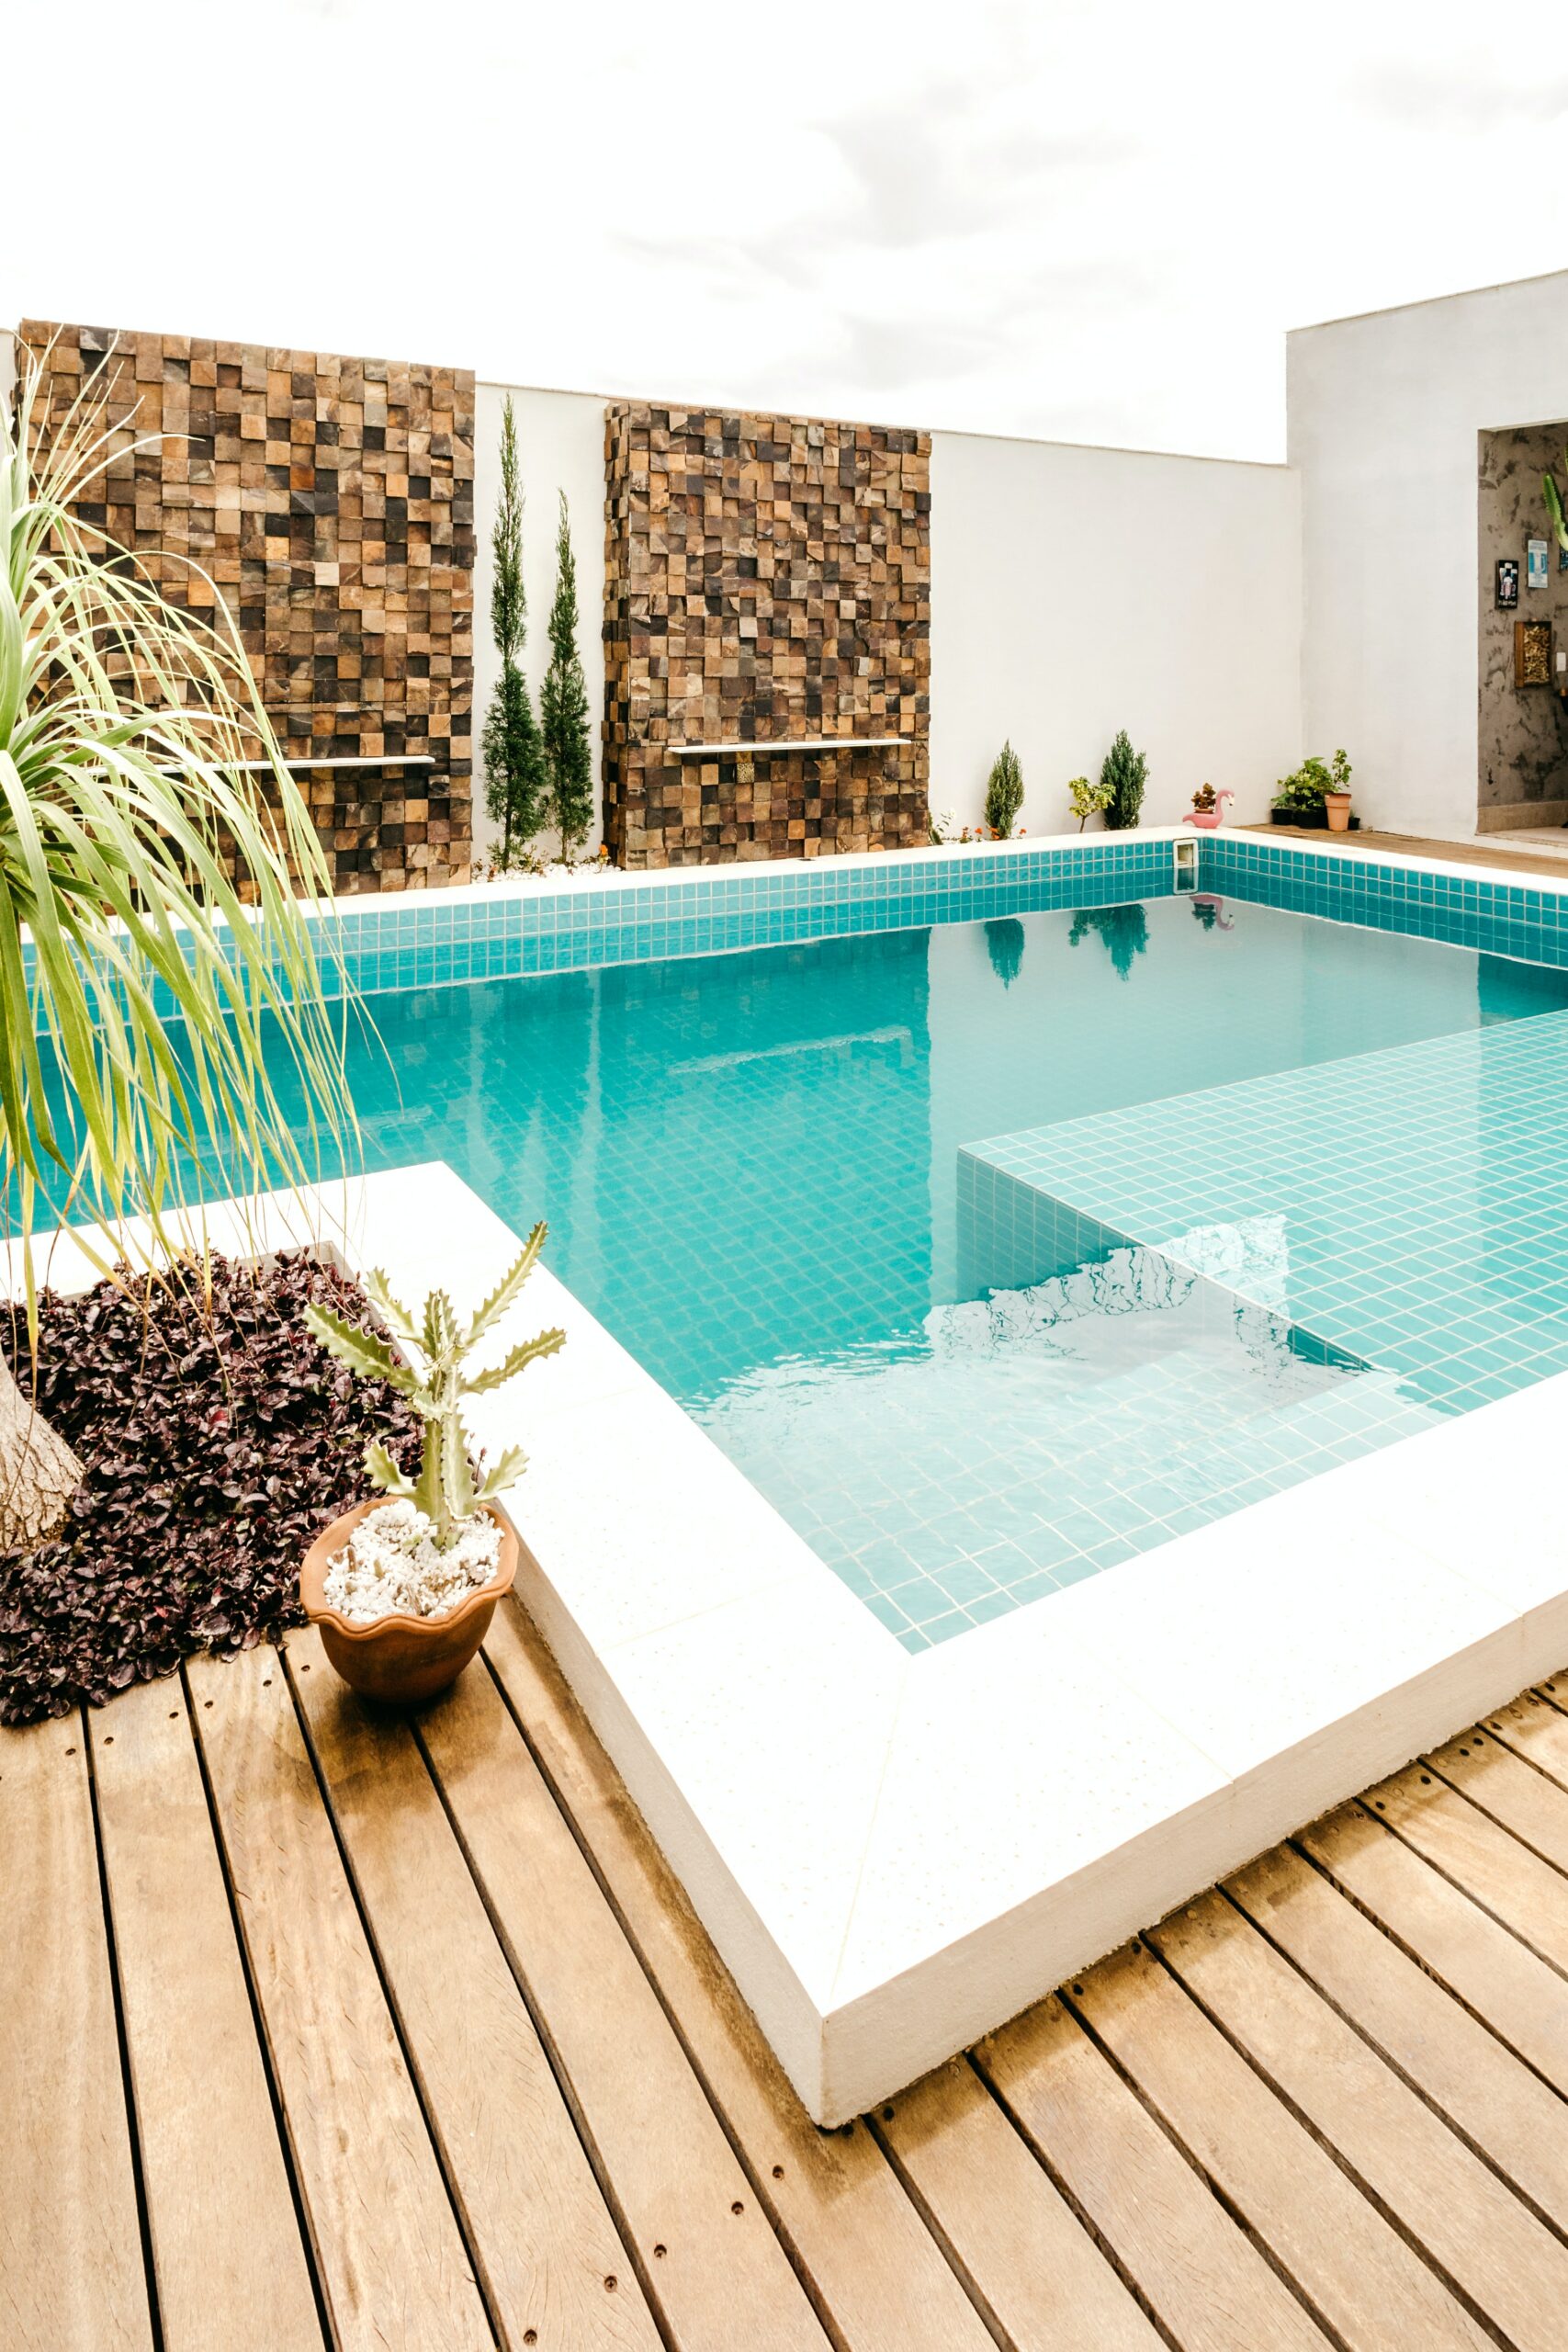 Backyard Pool Design 101: How to Create a Luxurious Oasis on a Budget